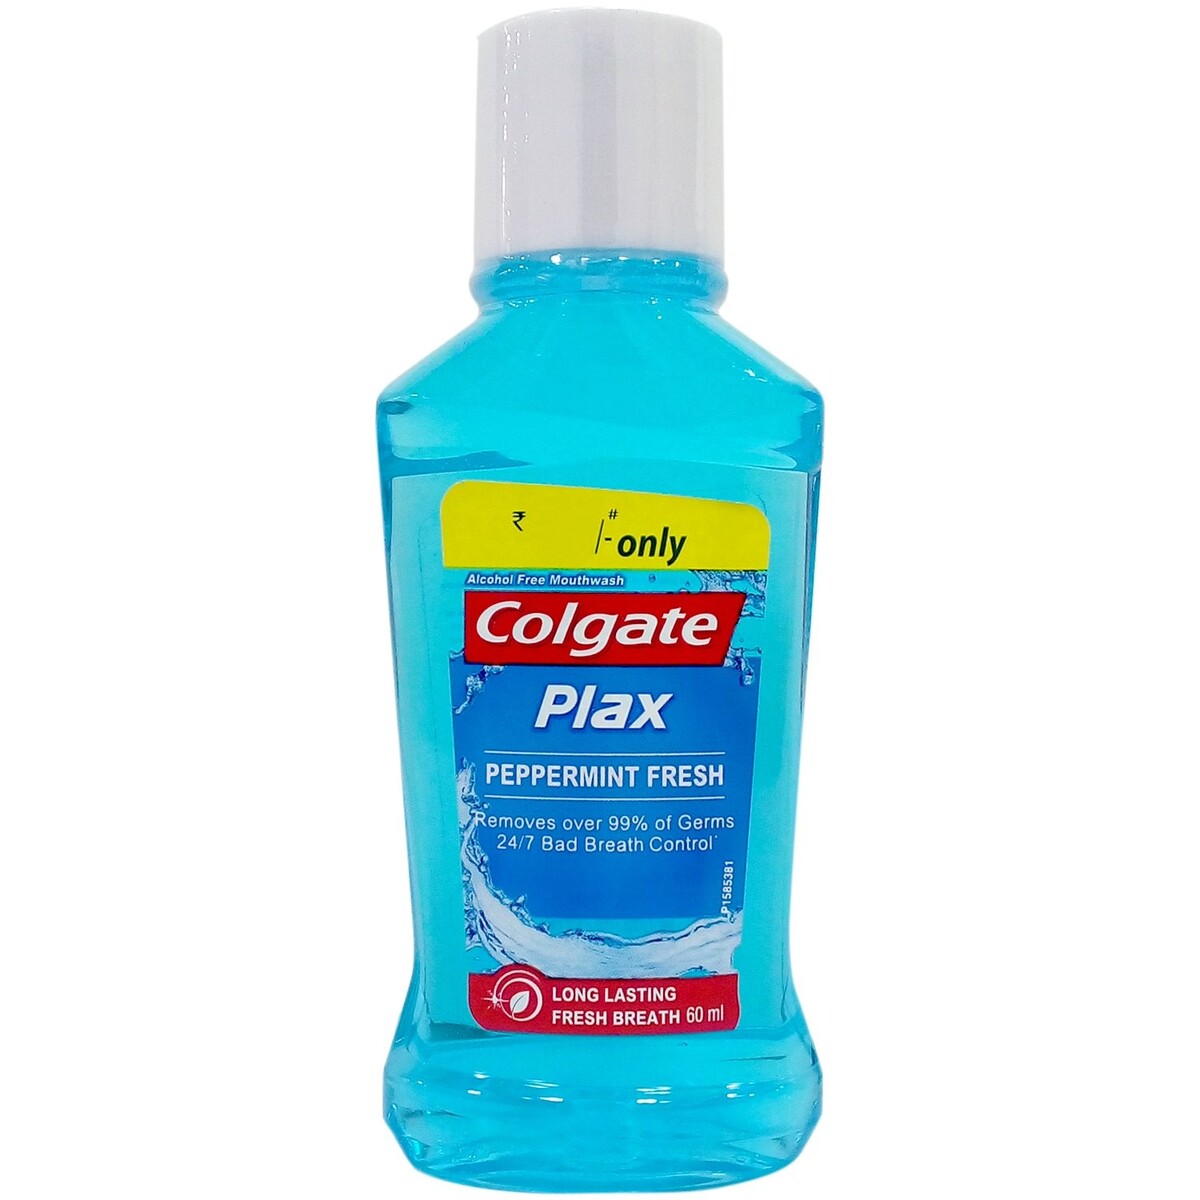 Colgate Mouth Wash Plax Peppermint Fresh 100ml